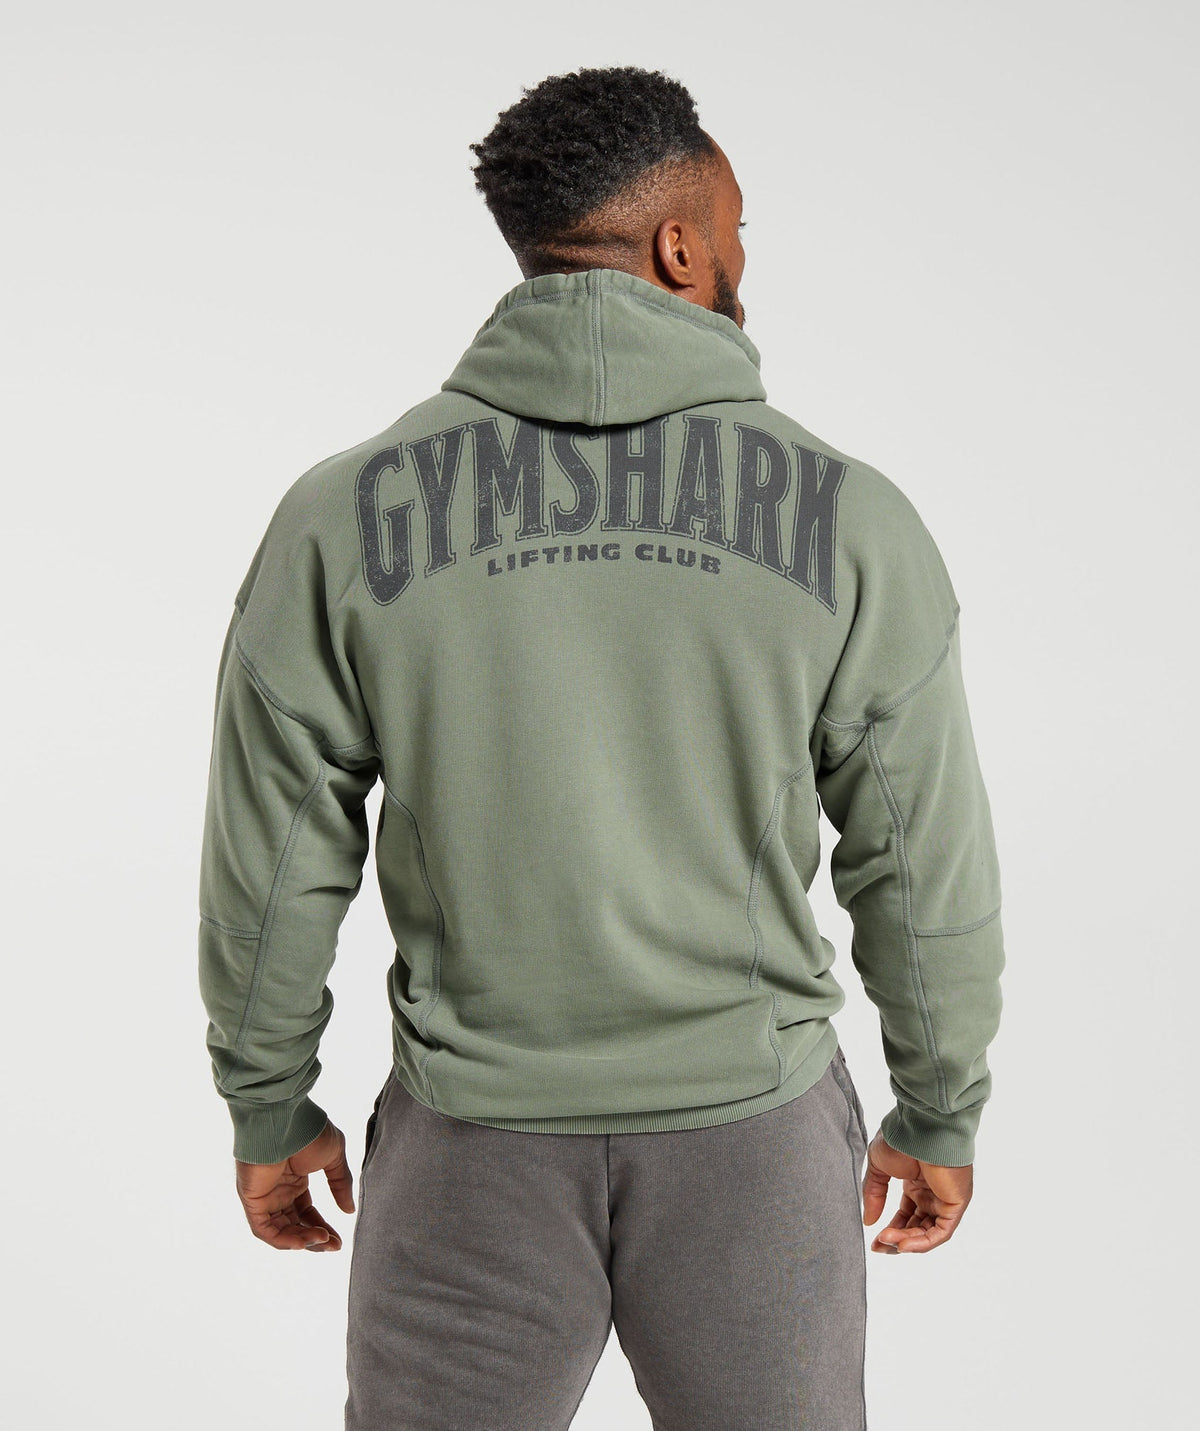 Gymshark Heritage Washed Hoodie - Onyx Grey | Gymshark